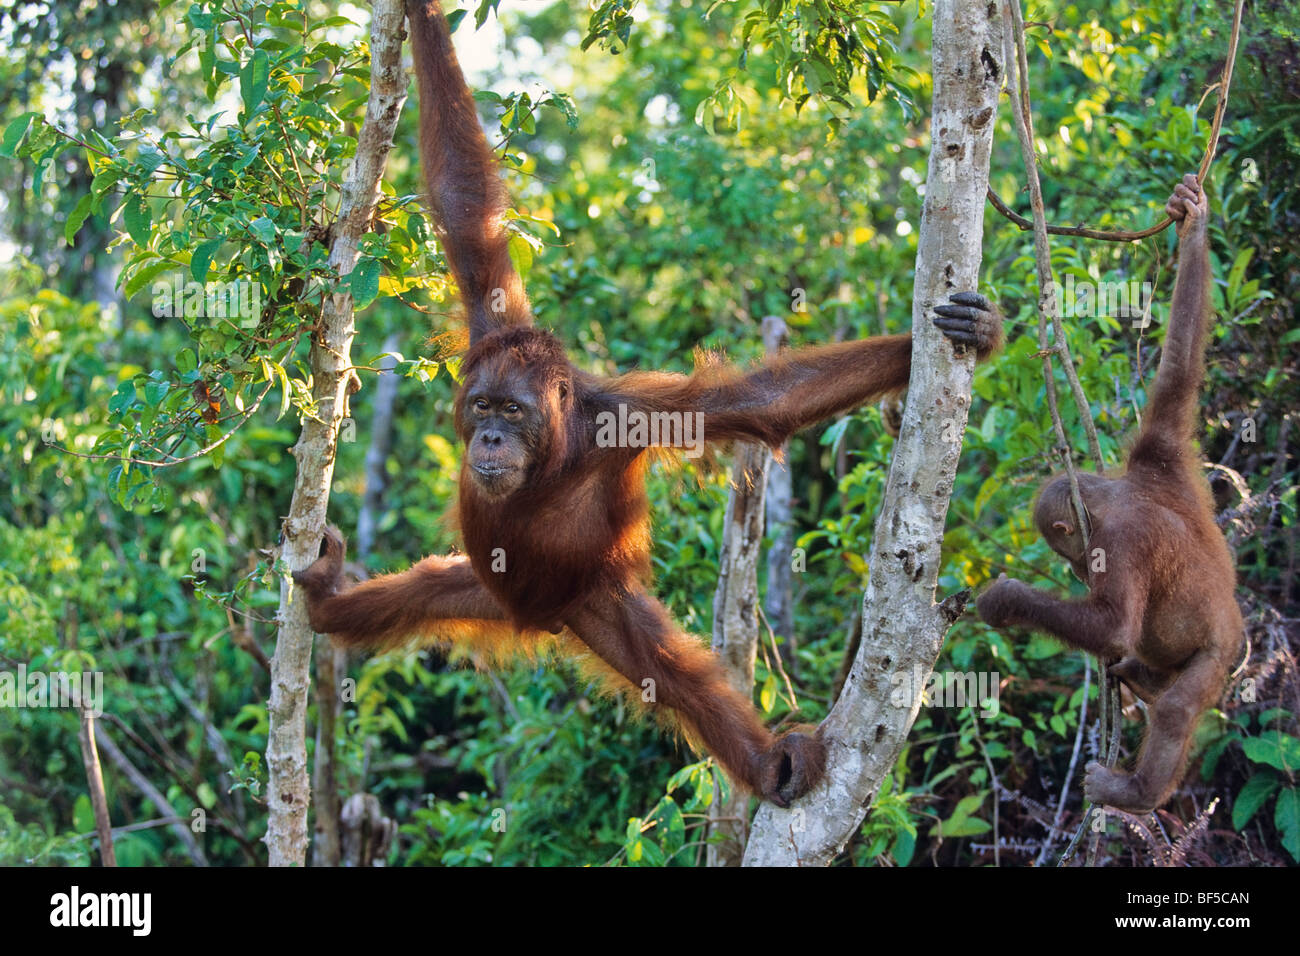 Young Orang Utan (Pongo pygmaeus) in tree, Tanjung Puting National Park, Borneo, Asia Stock Photo